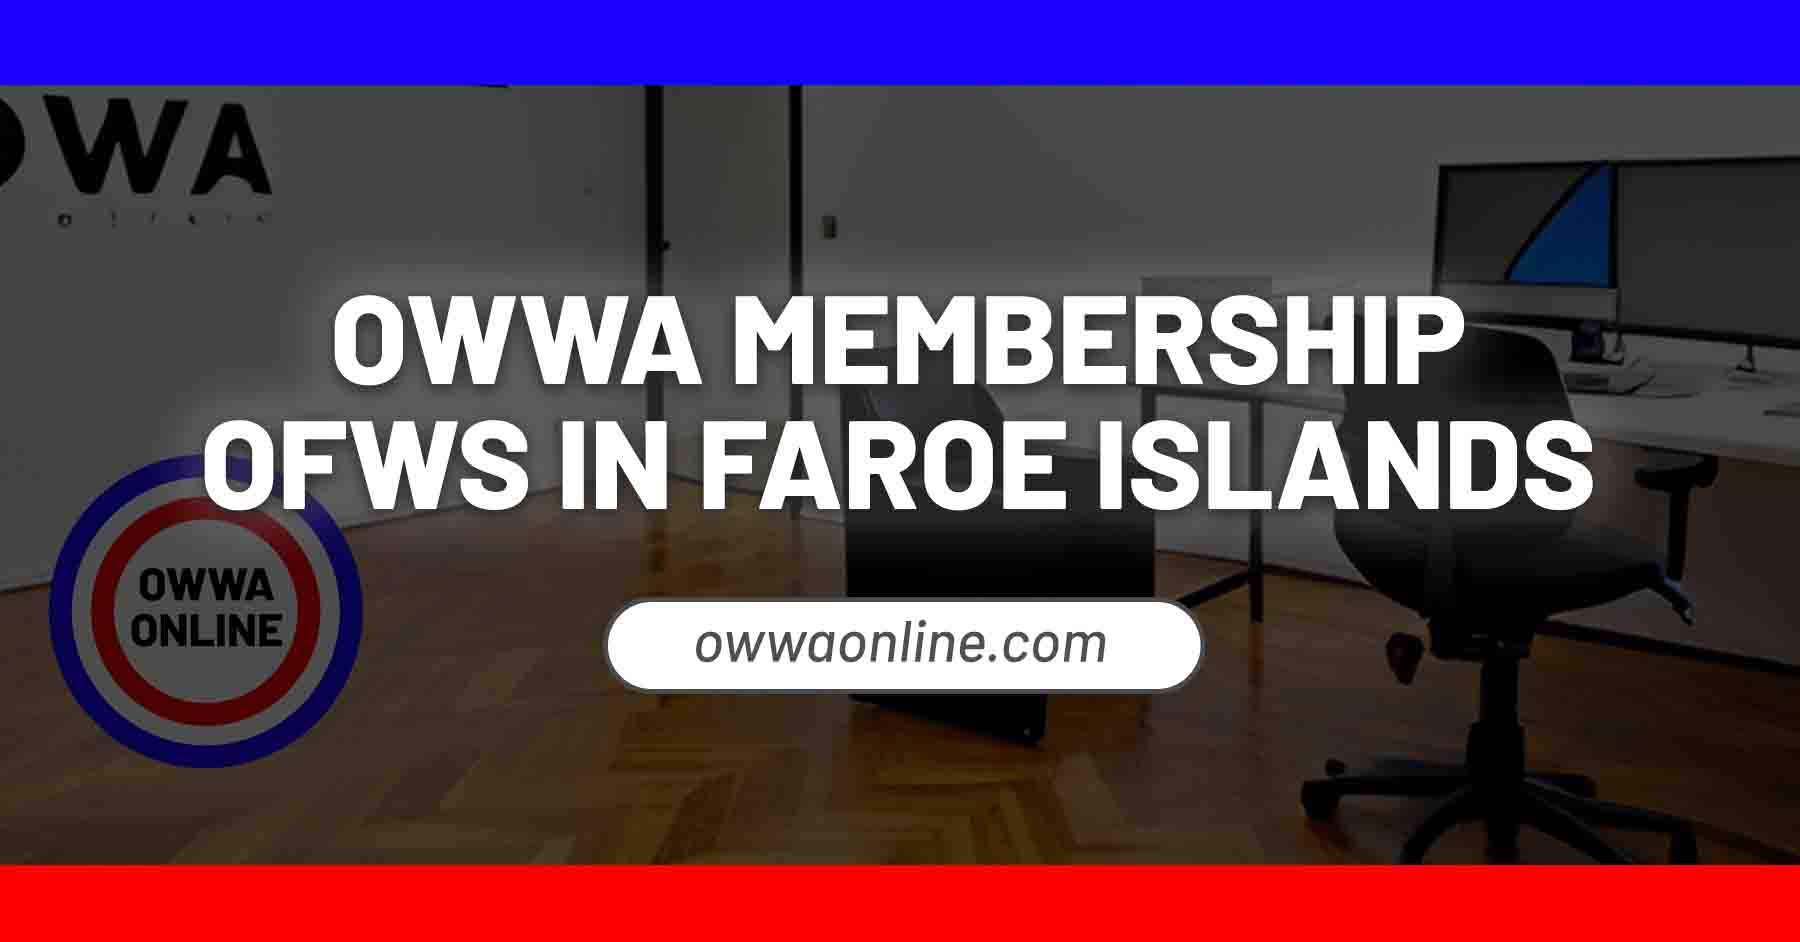 owwa membership application faroe islands